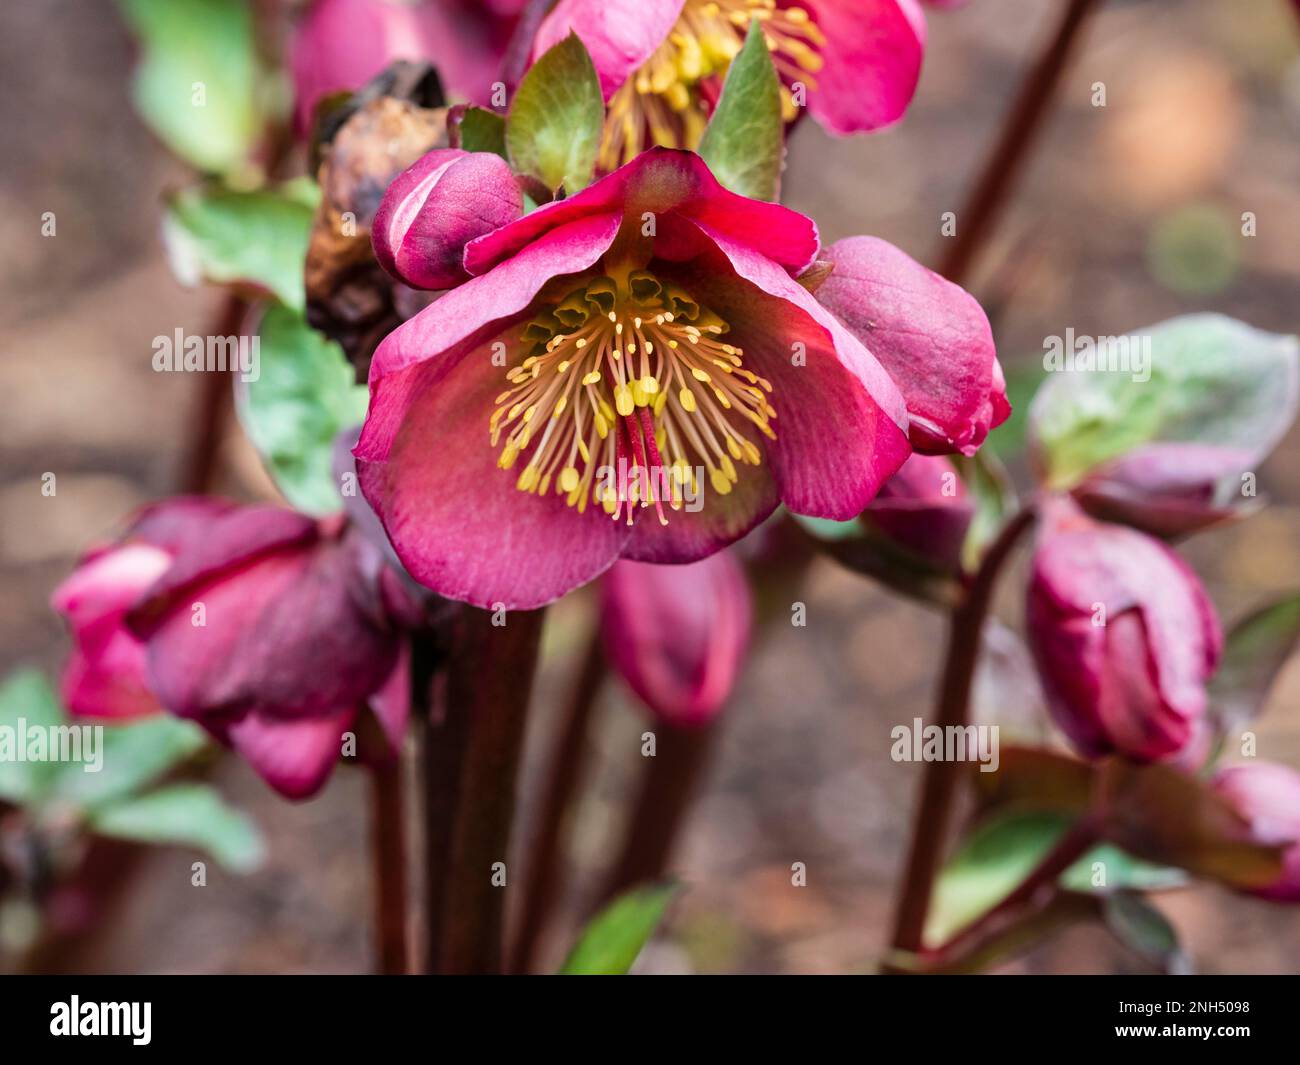 Pink February flower of the winter flowering hardy hellebore, Helleborus x hybridus 'Penny's Pink' Stock Photo